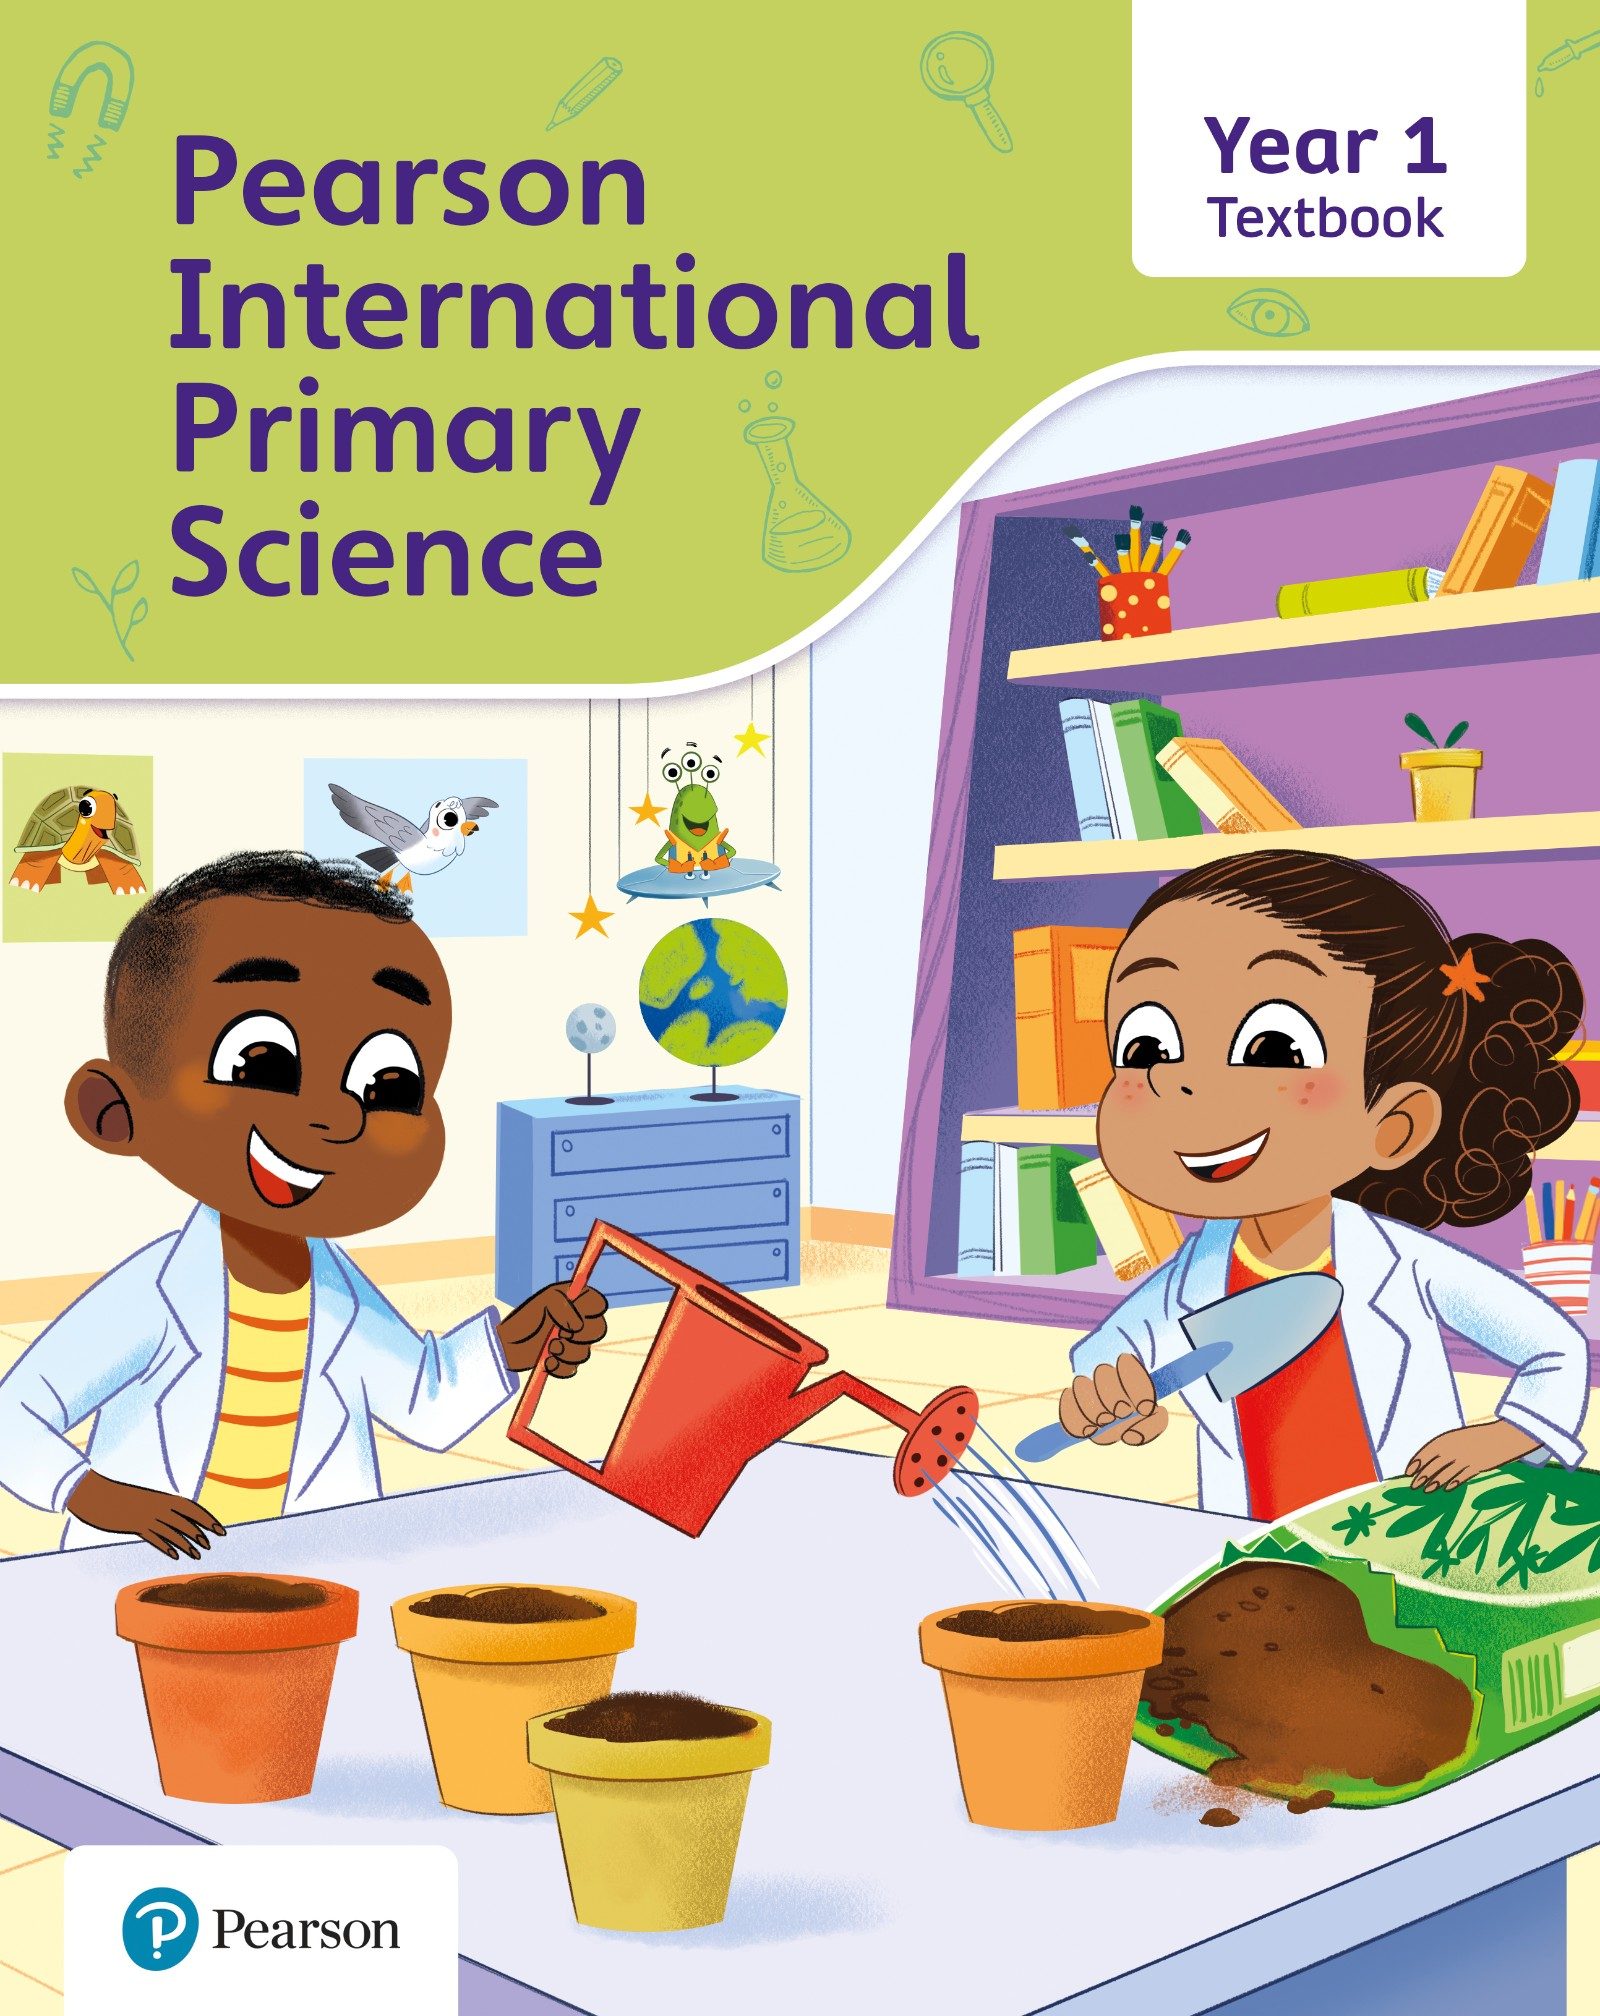 Pearson International Primary Science